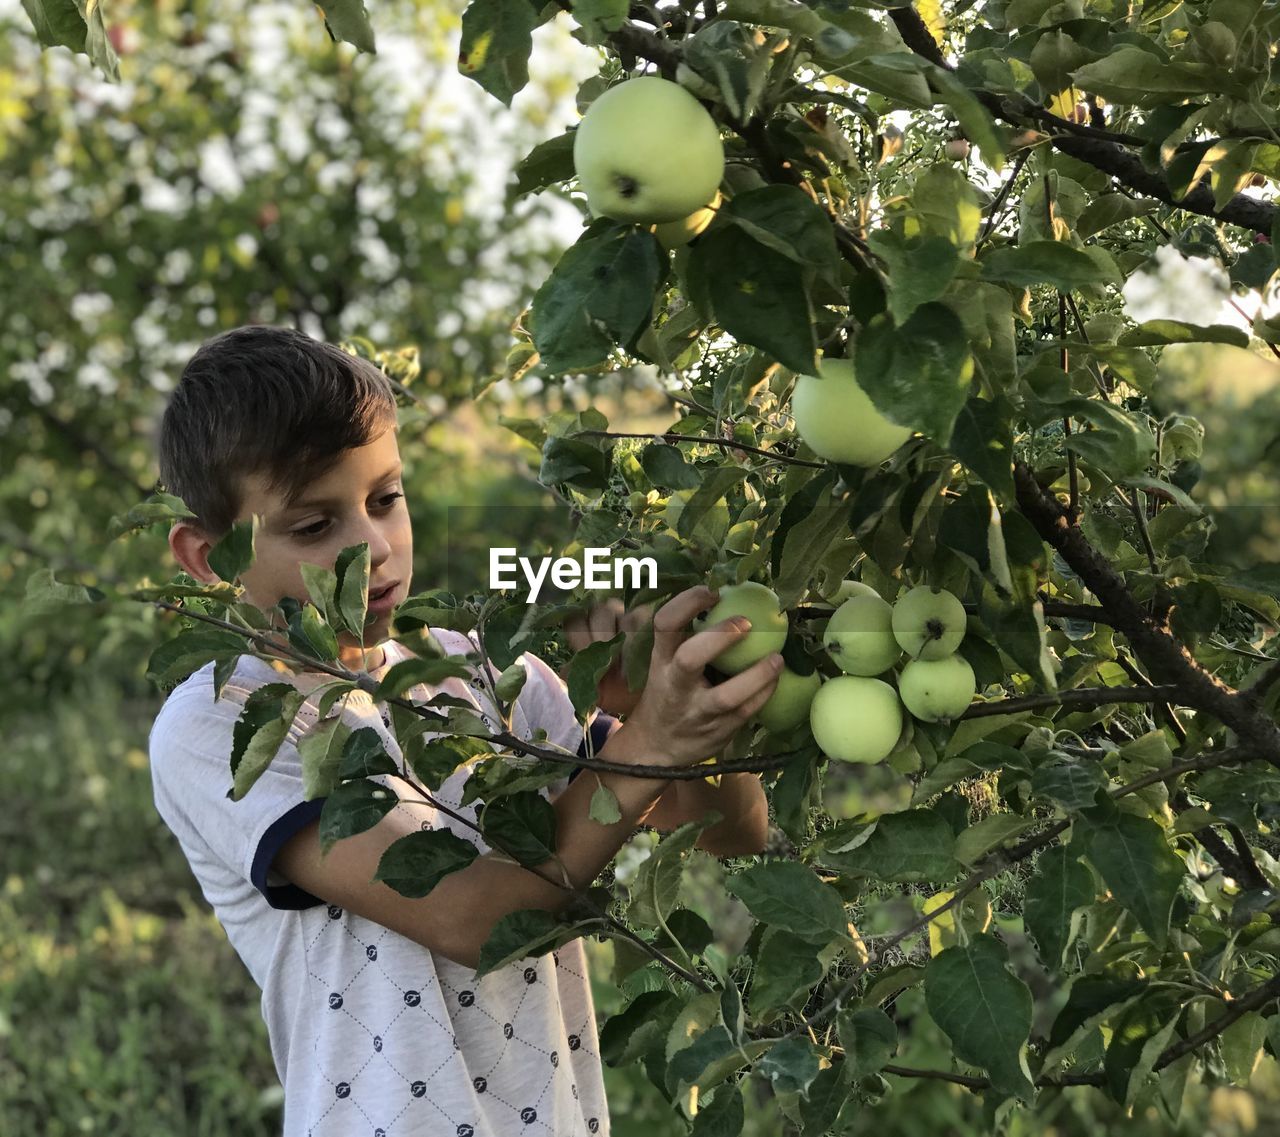 Boy plucks the first apples in his garden 